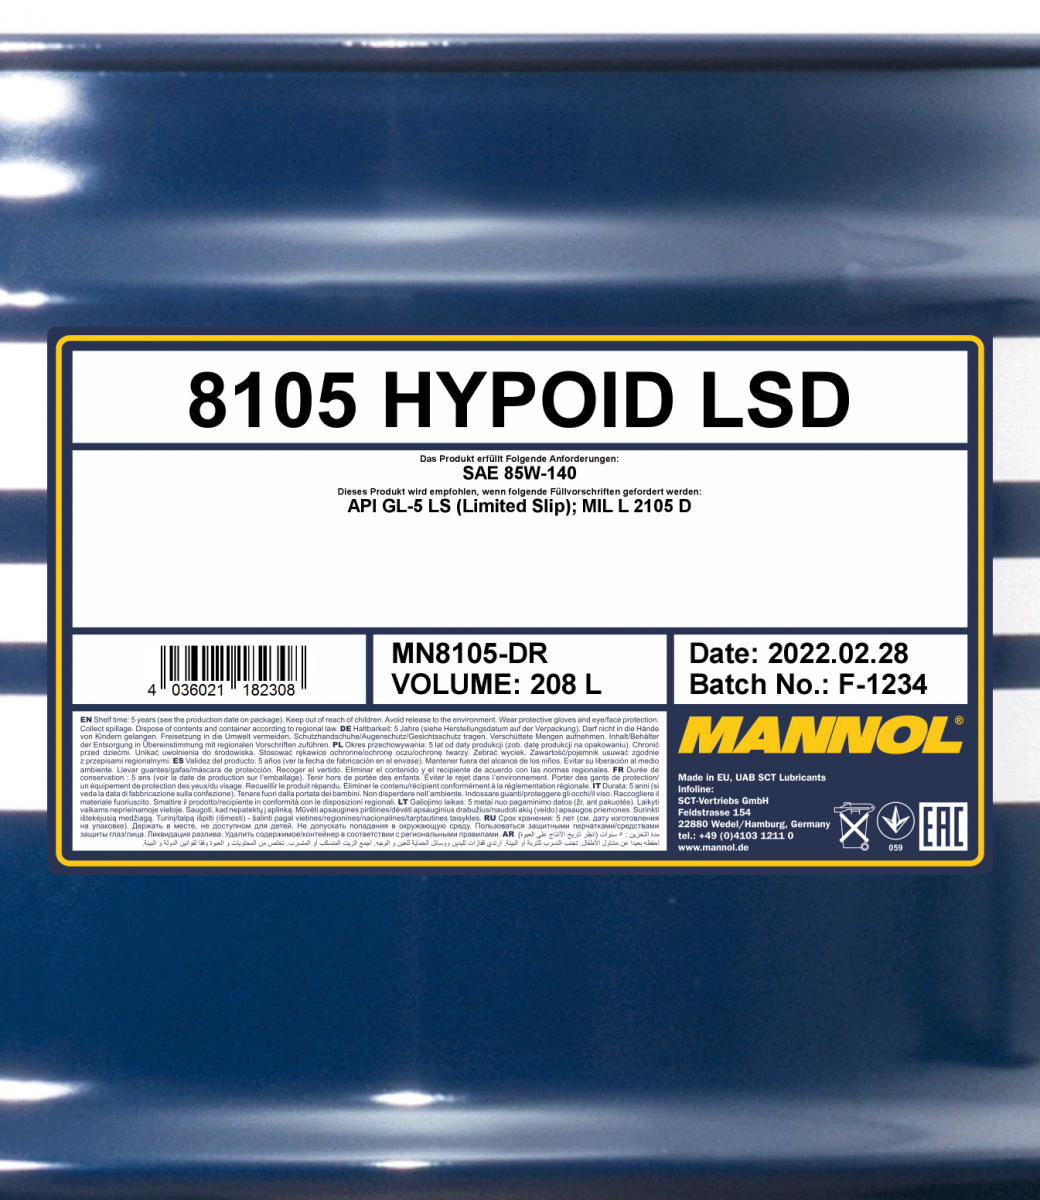 85W-140 Mannol 8105 Hypoid LSD GL-5 LS Getriebeöl 208 Liter